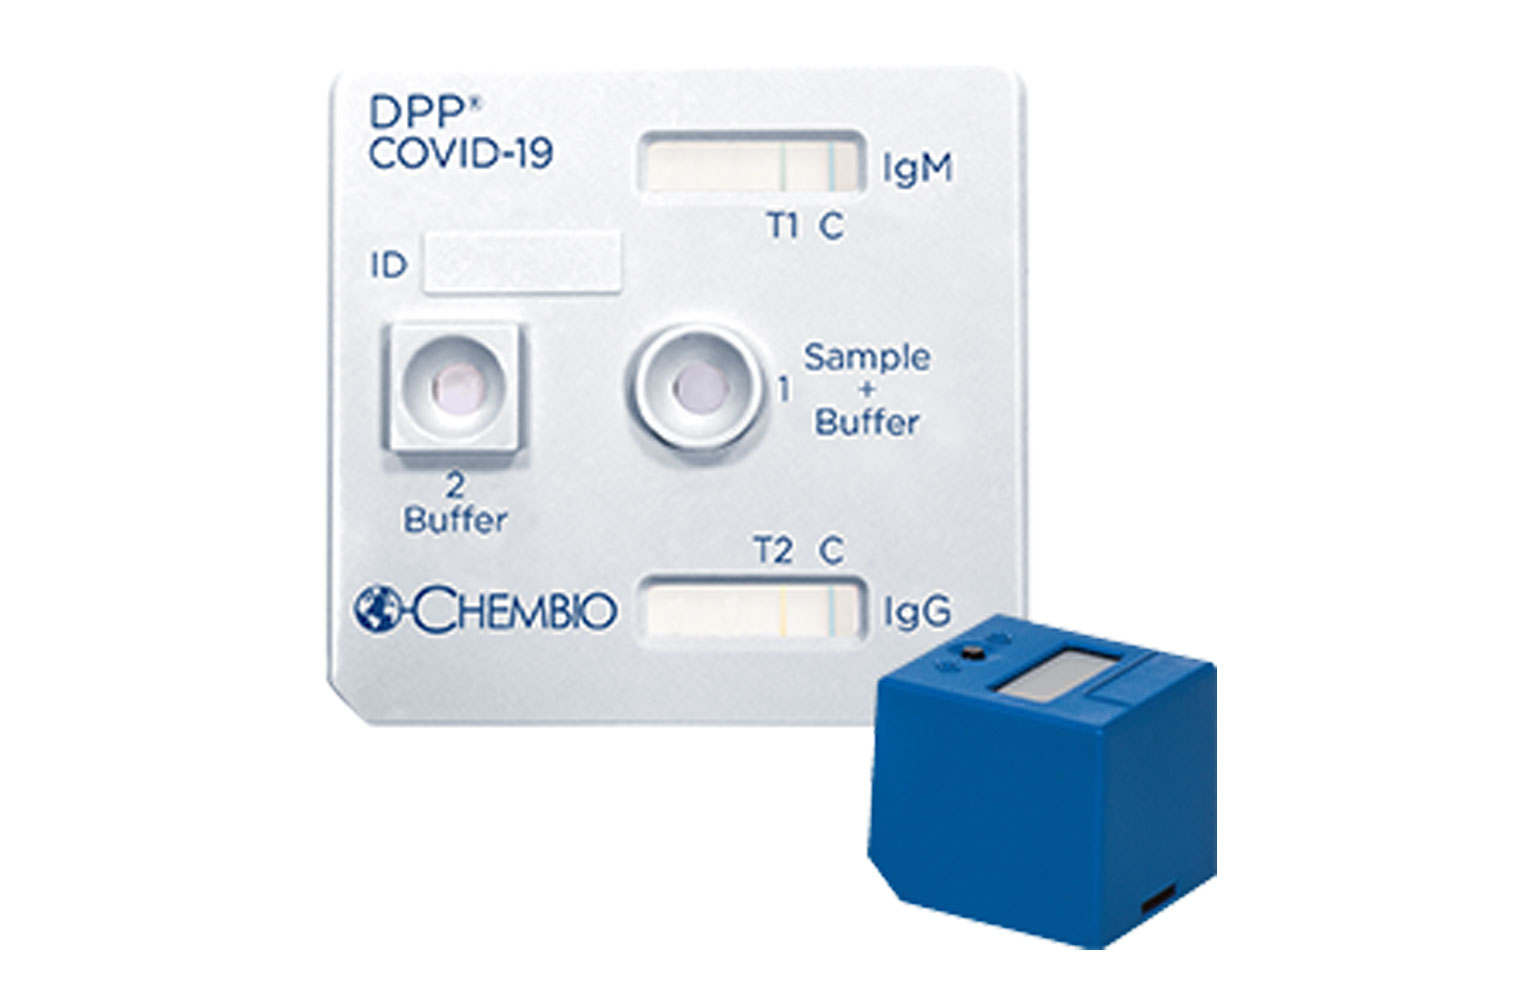 DPP Covid-19 Igm/Igg System